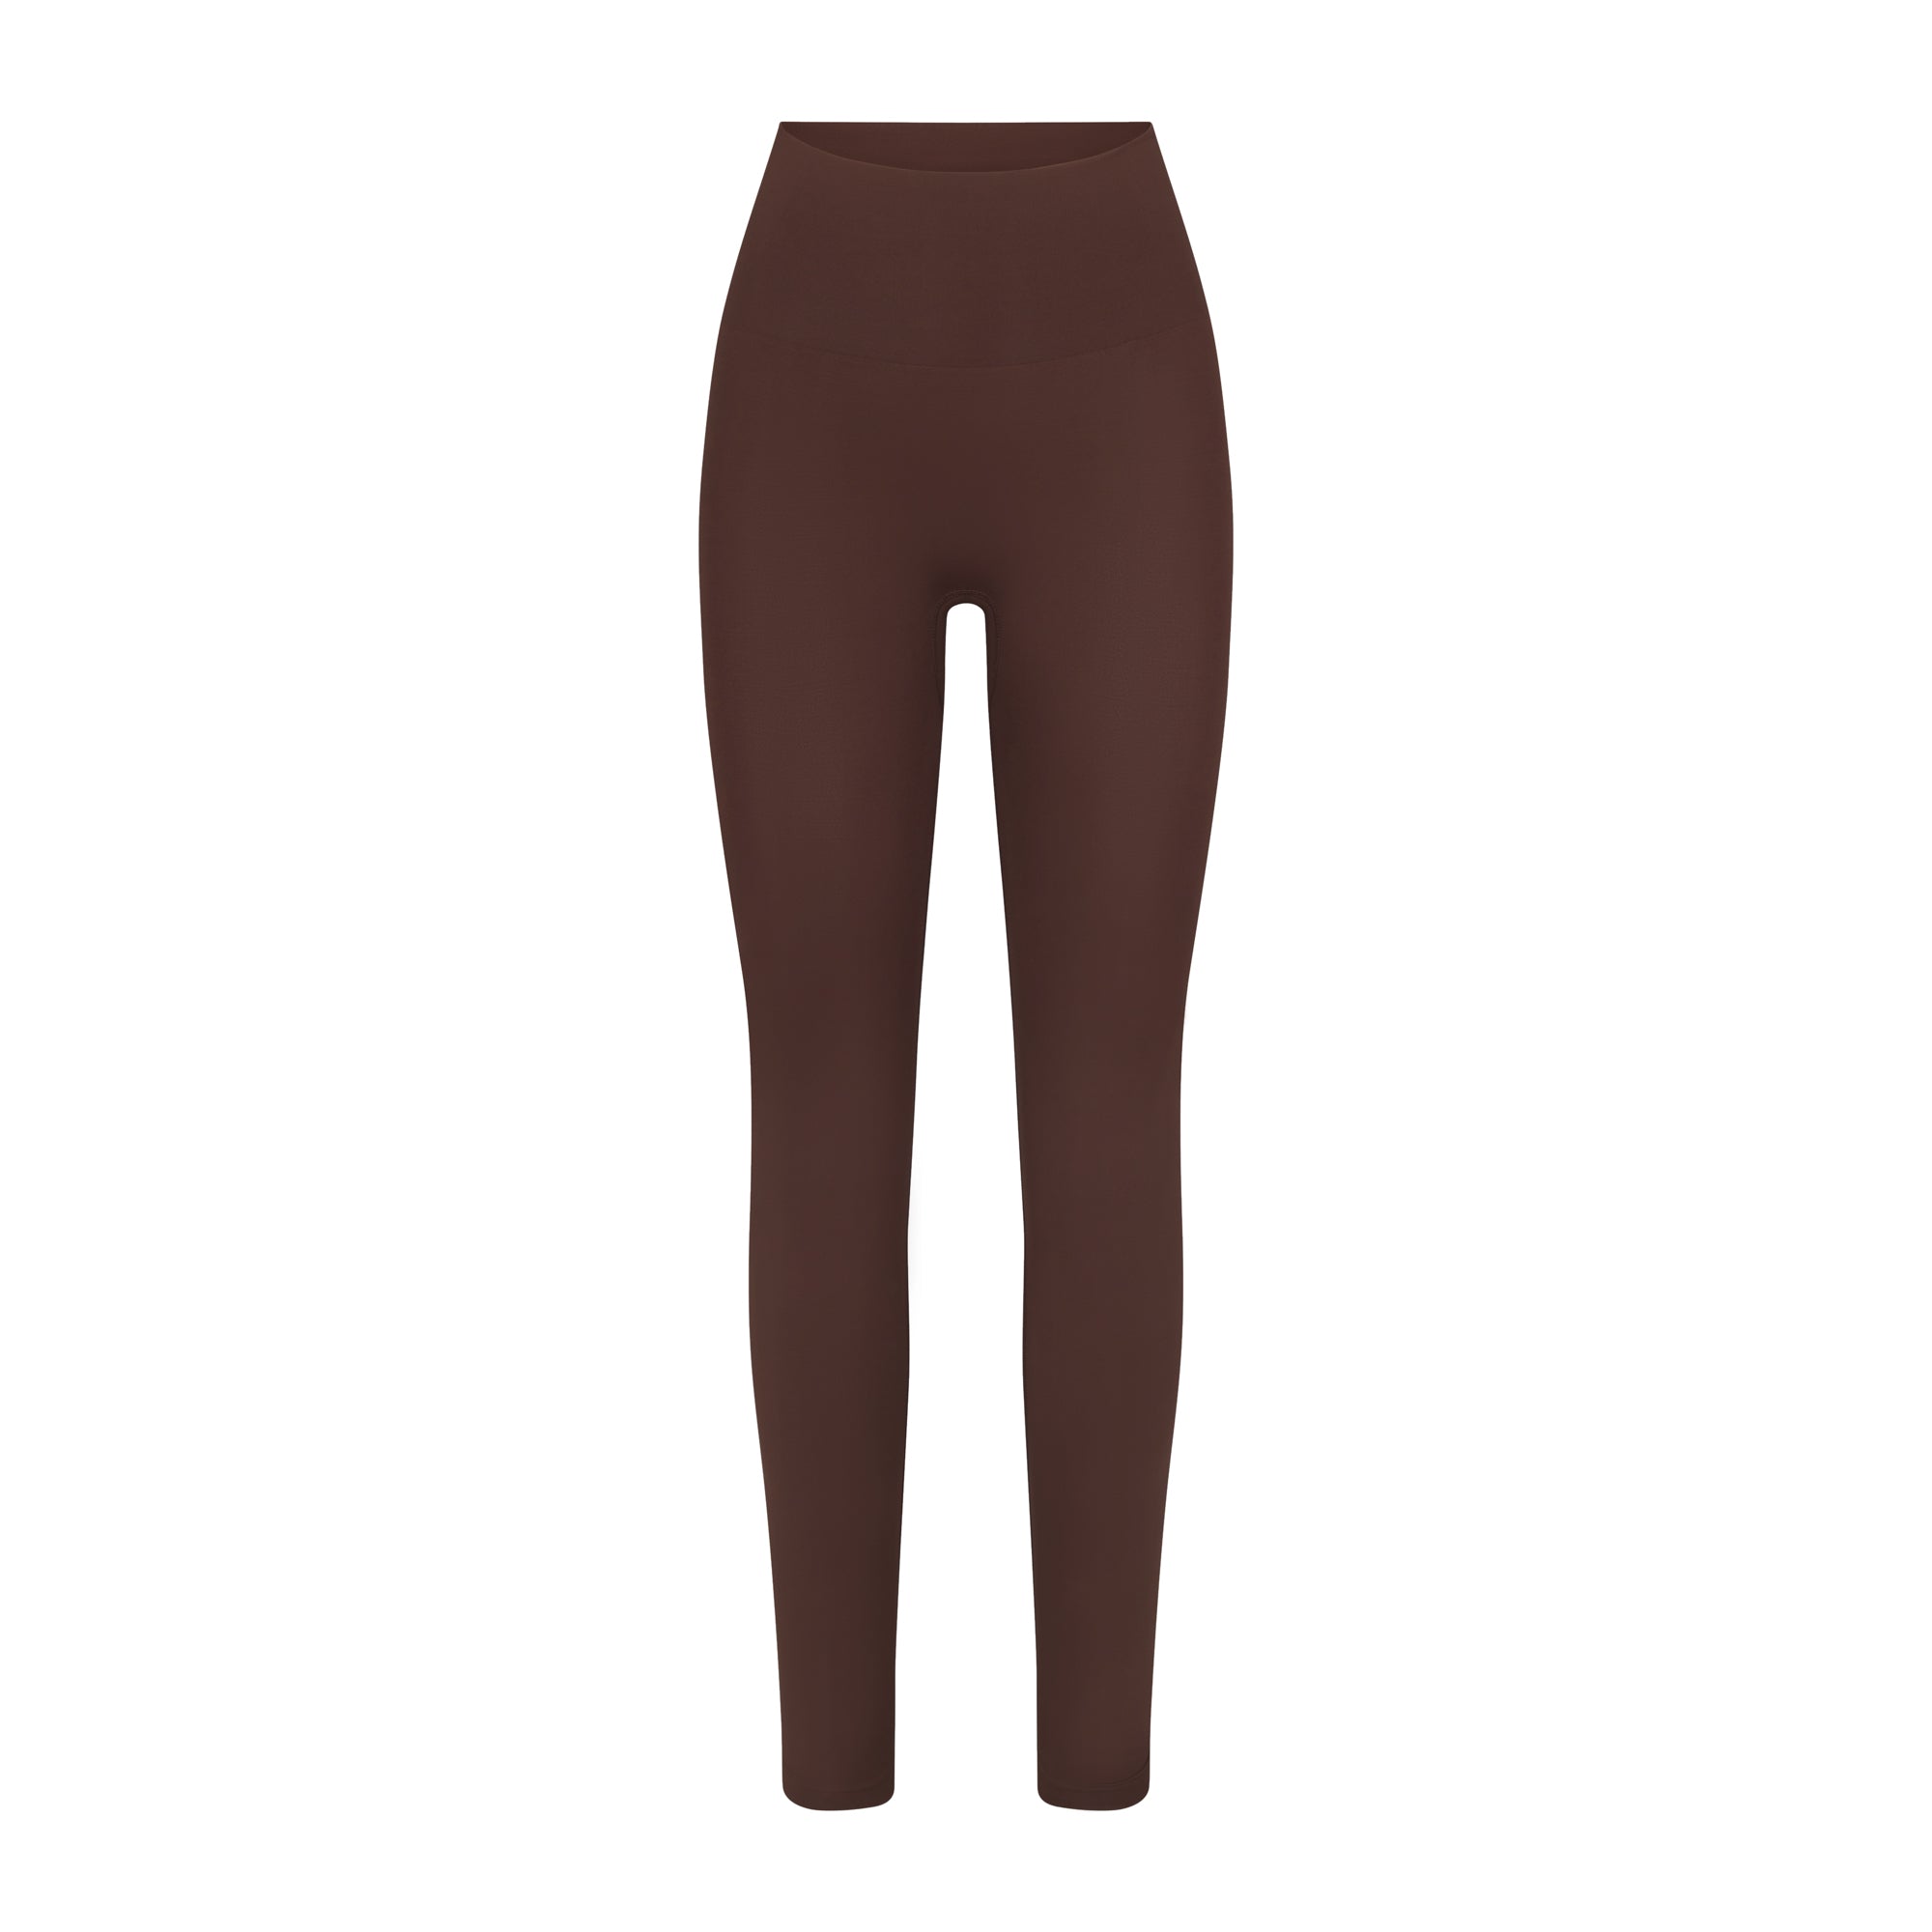 Soft leggings with elastic - Light Brown Black